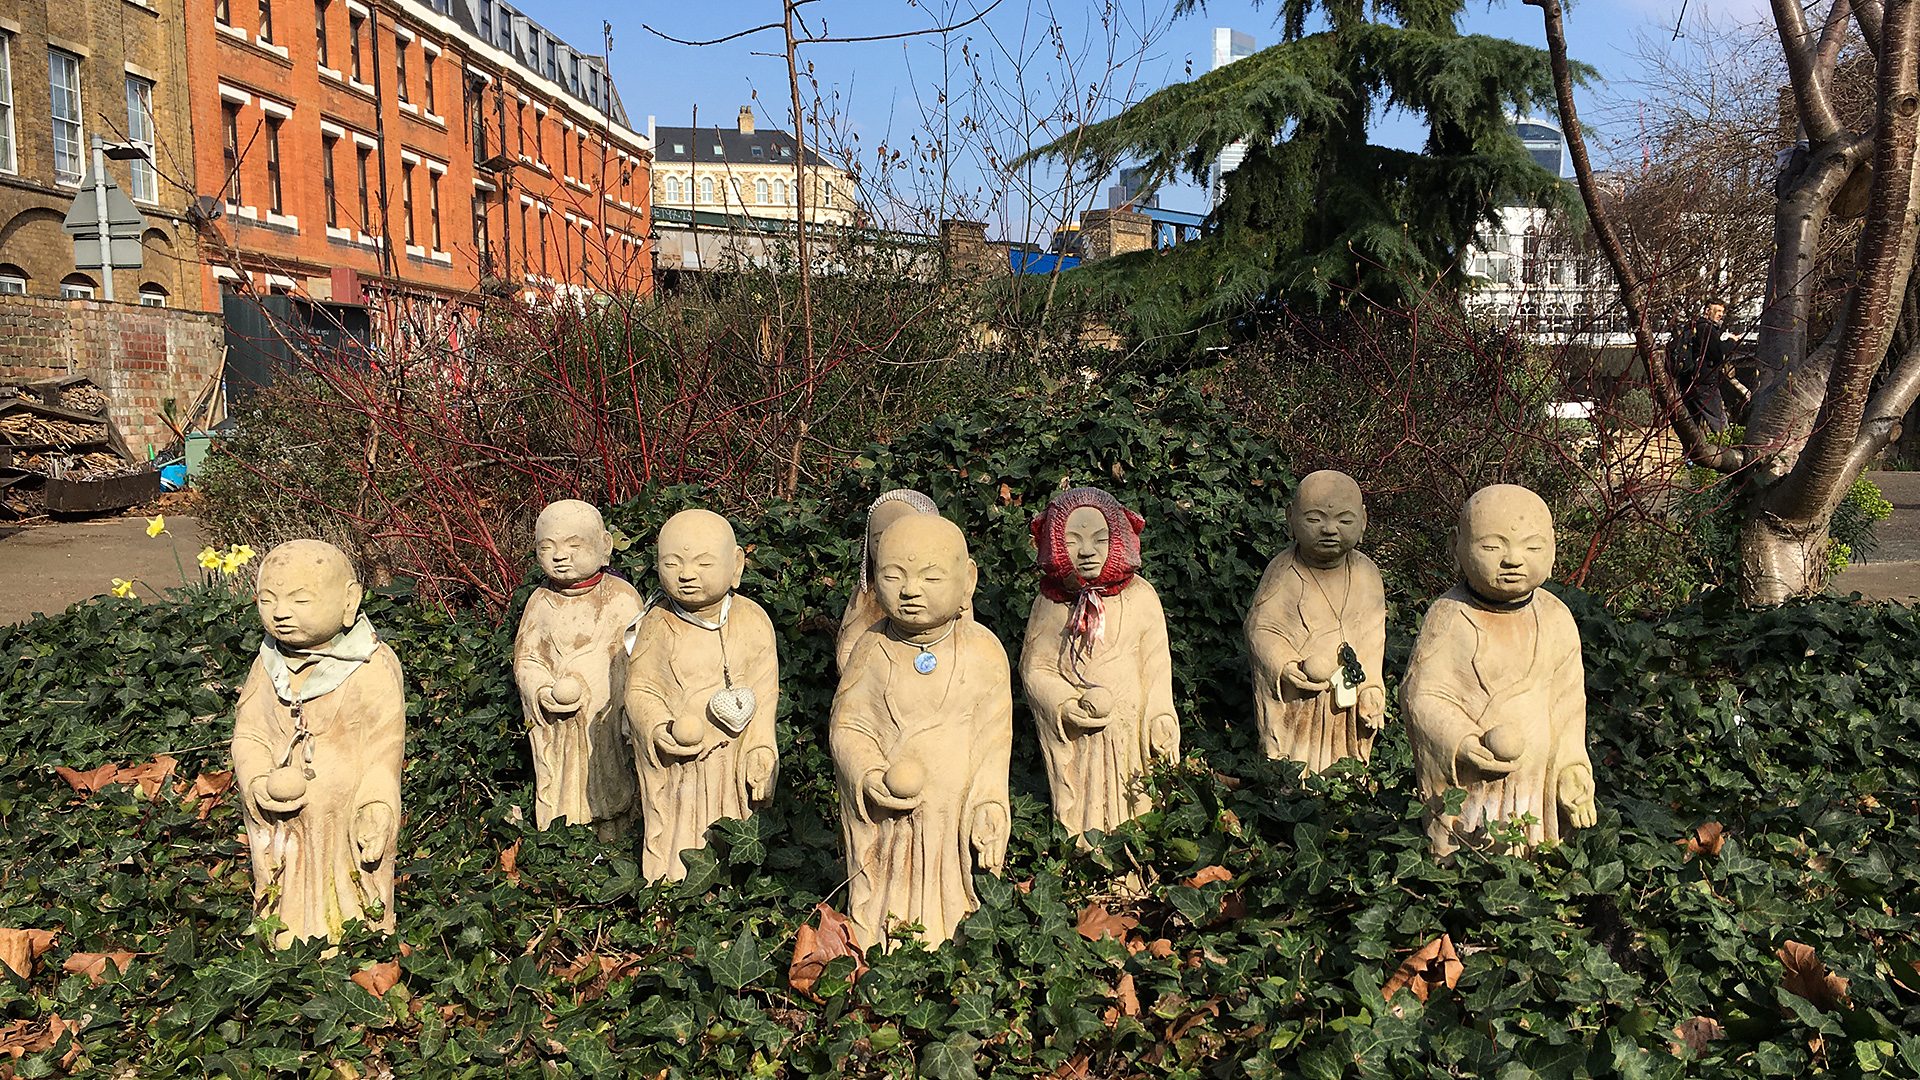 Statues in the Crossbones Graveyard, London